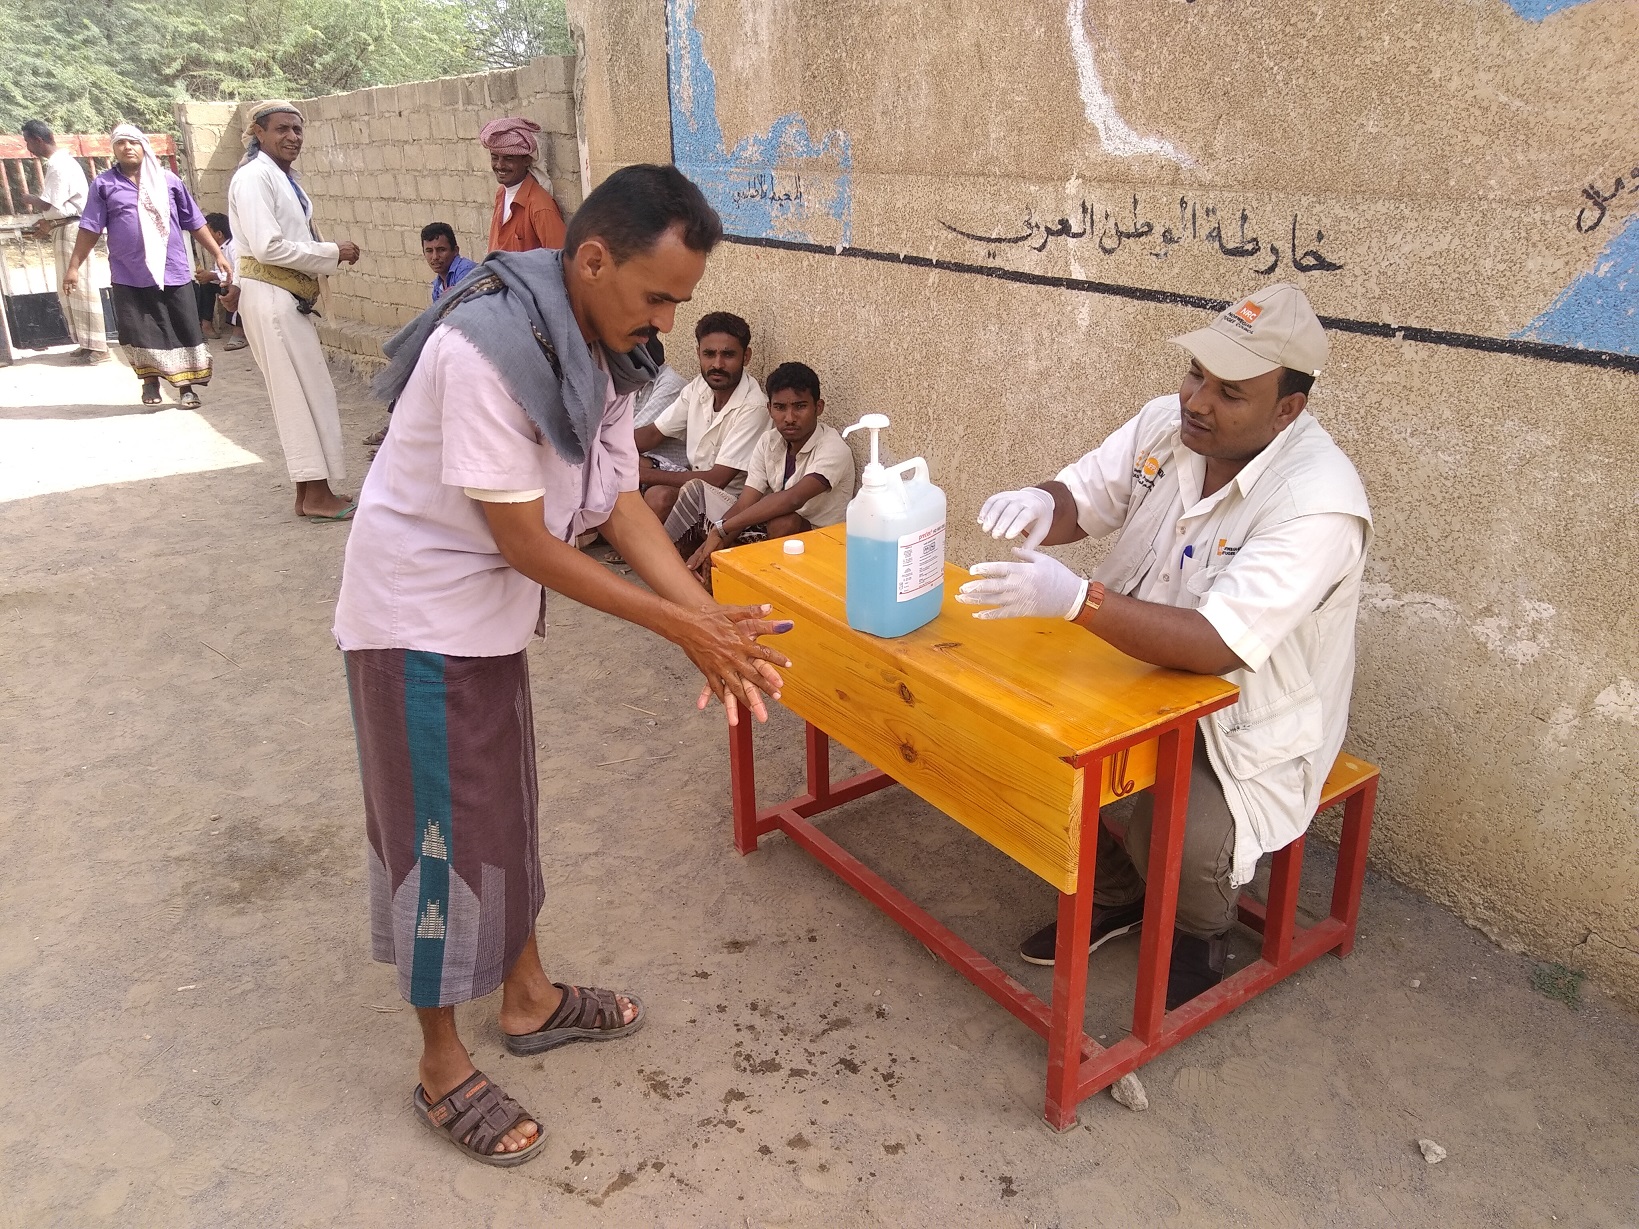 Precautionary measures against COVID-19 in Hodeidah, Yemen. Credit: Abdulhameed Ayyash/NRC